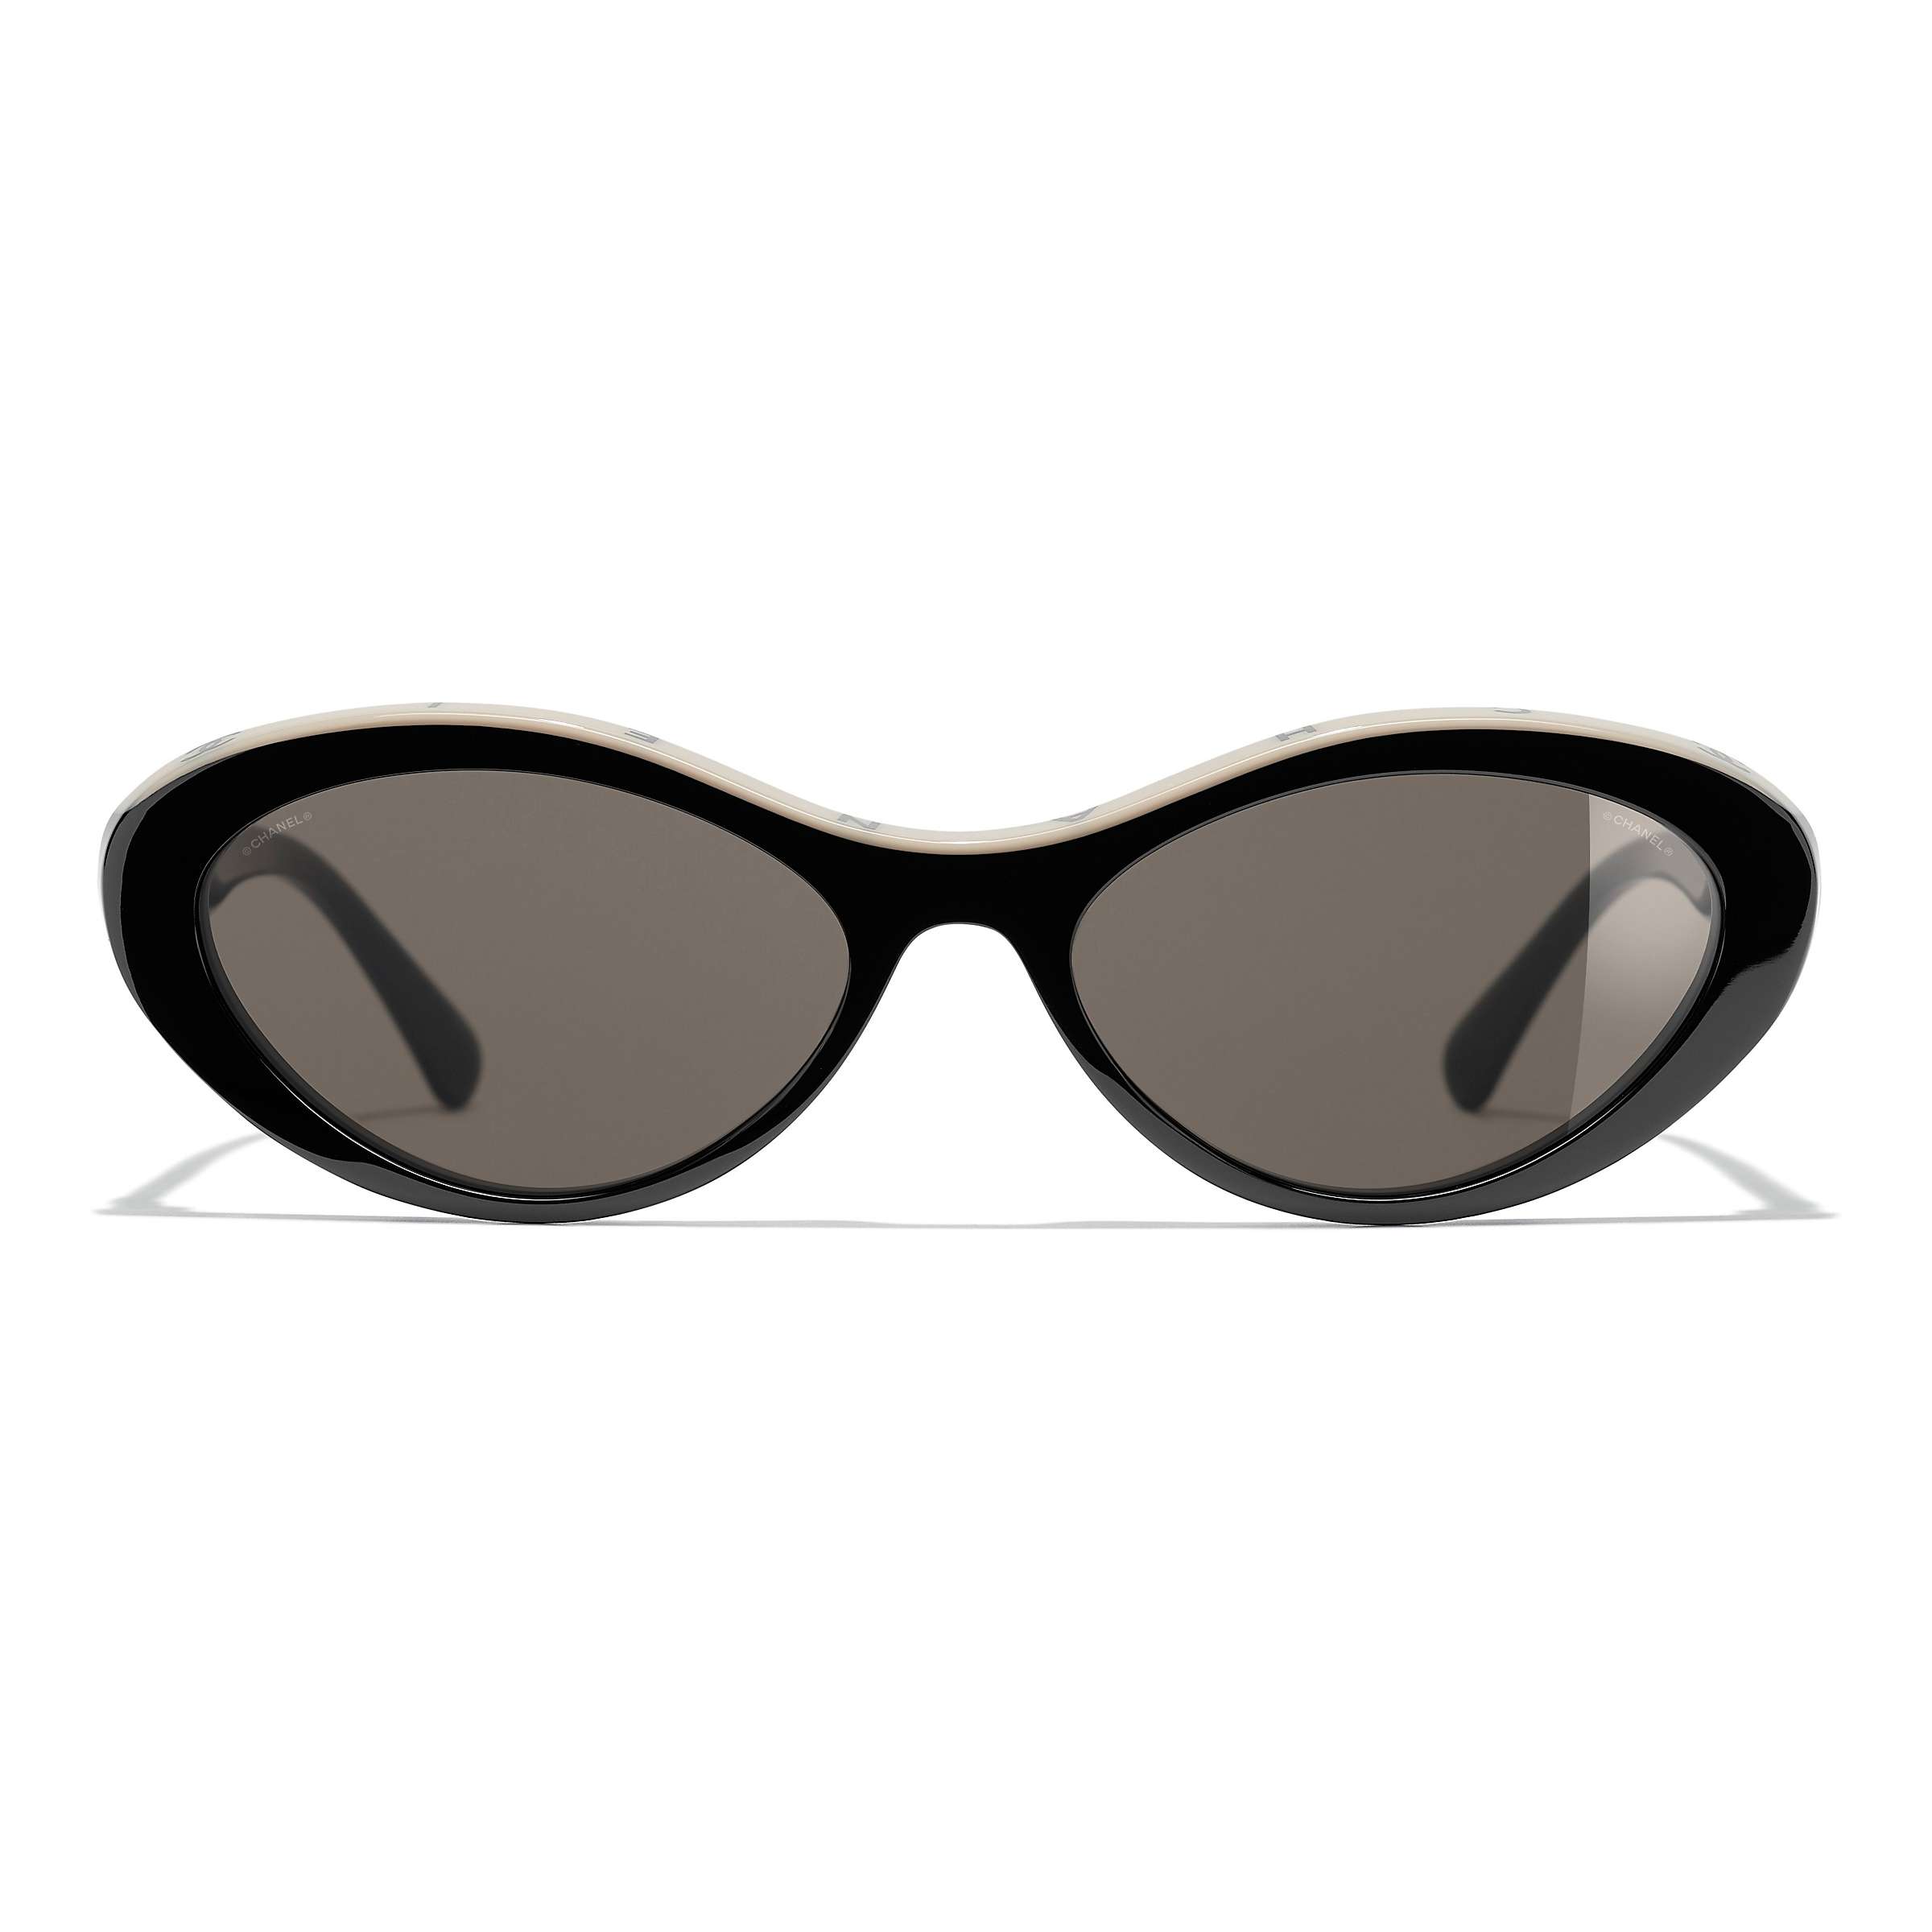 Buy CHANEL Oval Sunglasses CH5416 Black/Beige Online at johnlewis.com